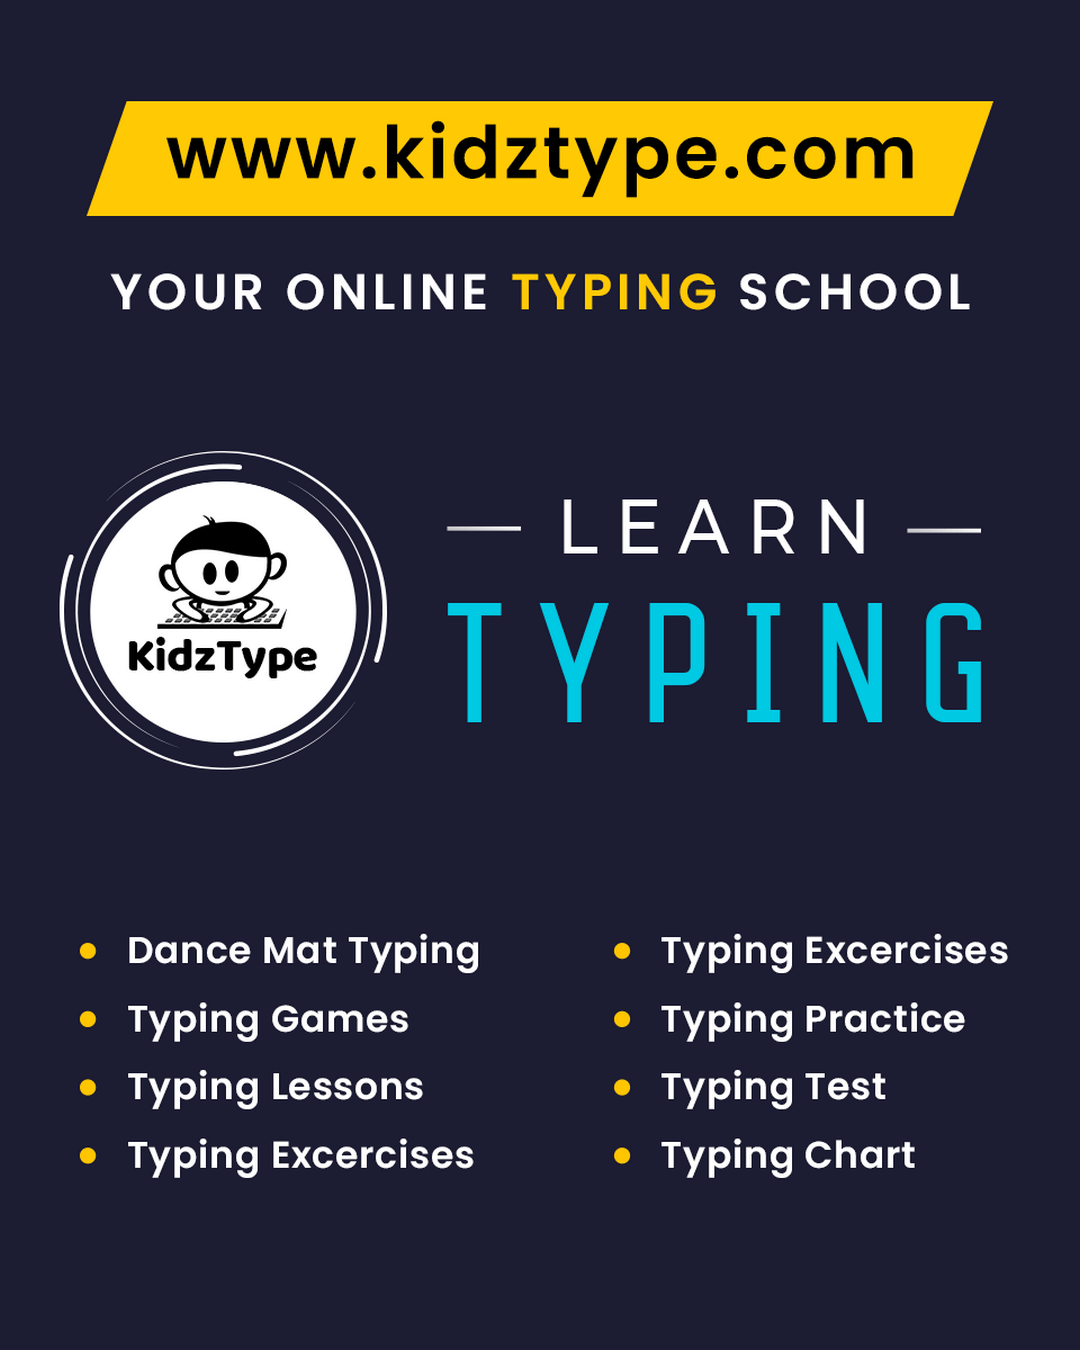 Dance Mat Typing - Fun Way To Learn Keyboarding- KidzType